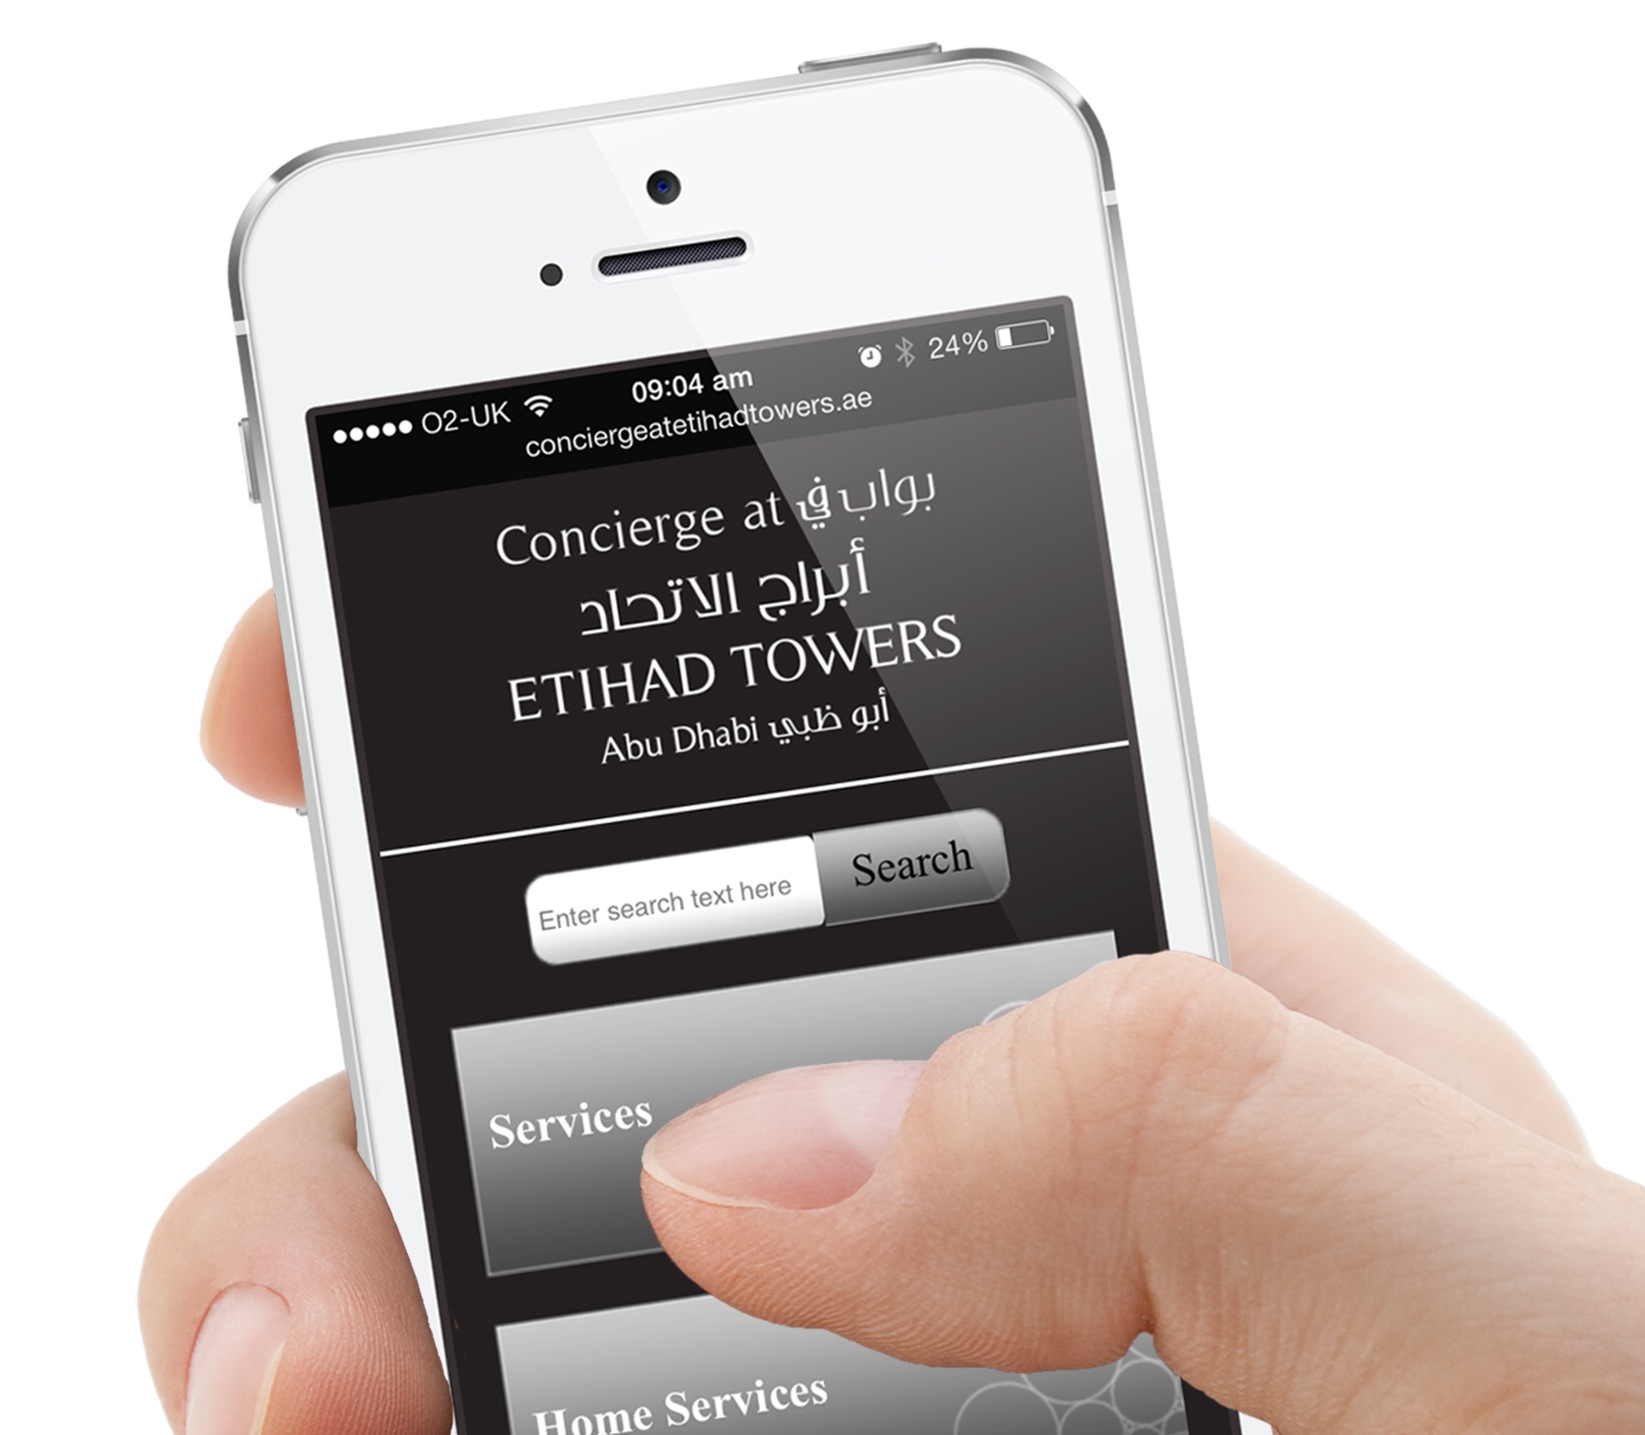 Etihad Towers Abu Dhabi Launches Concierge App - Gulf Business